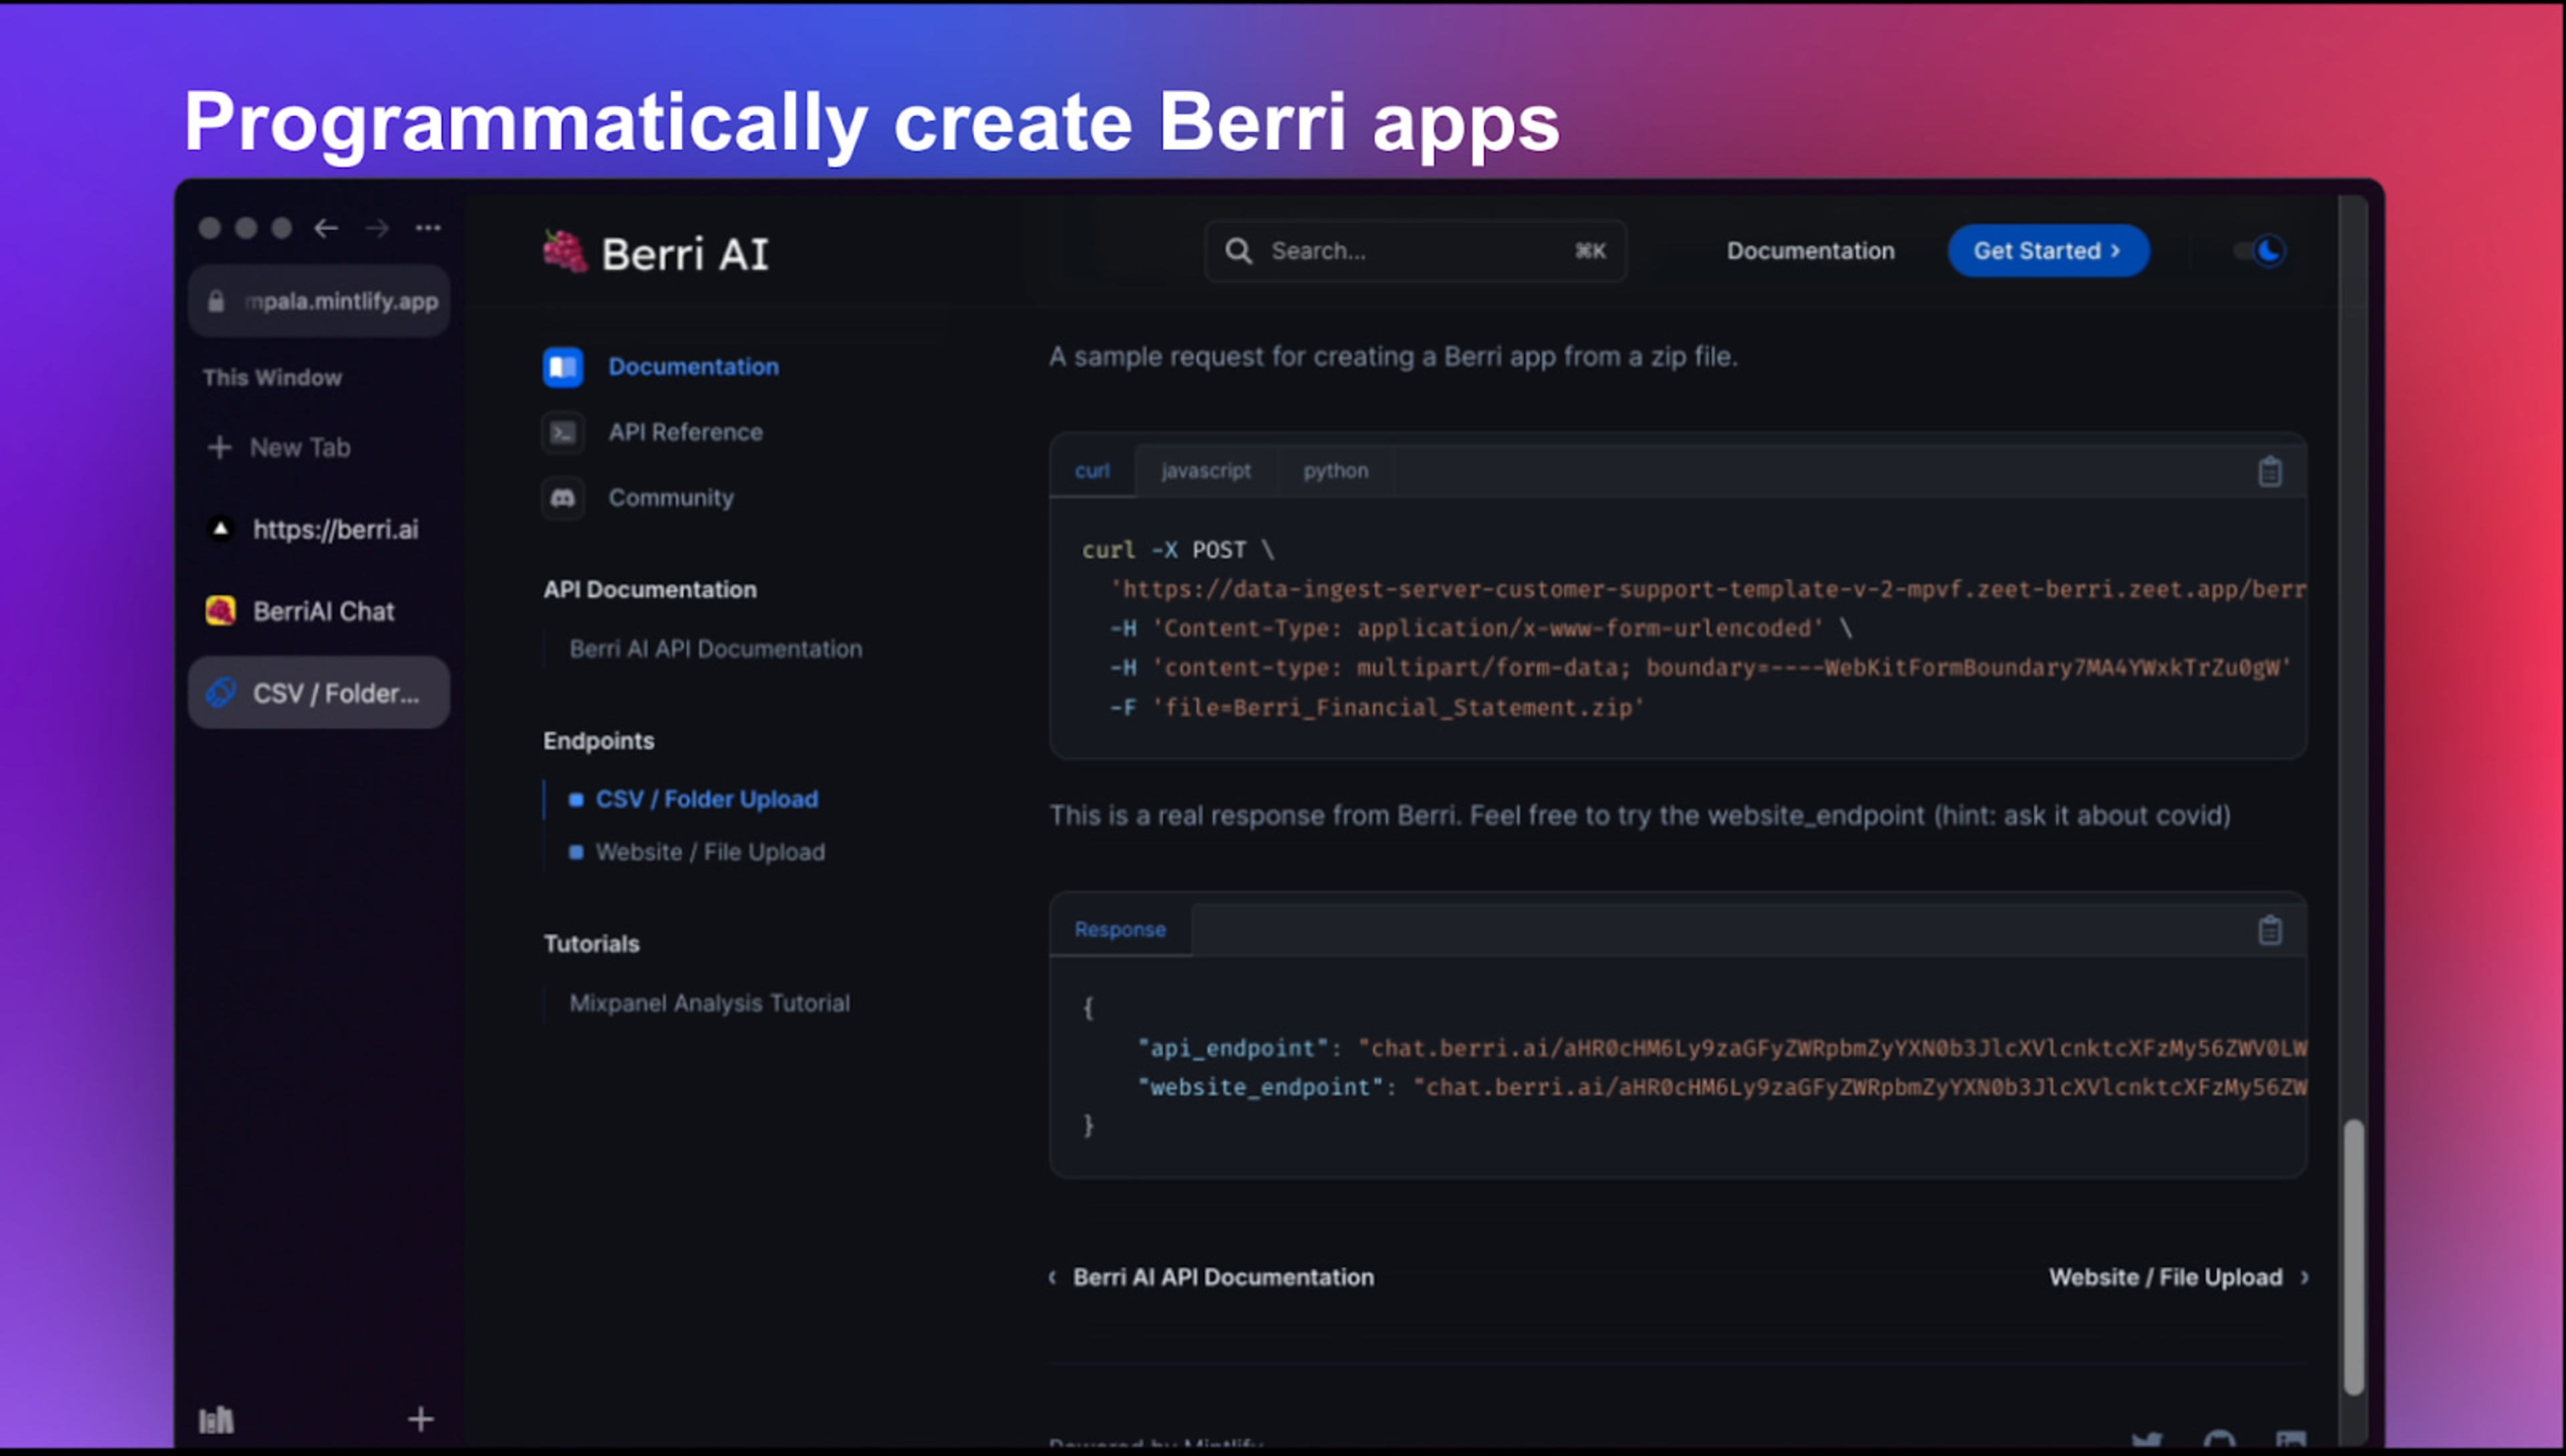 BerriAI Apps Demo